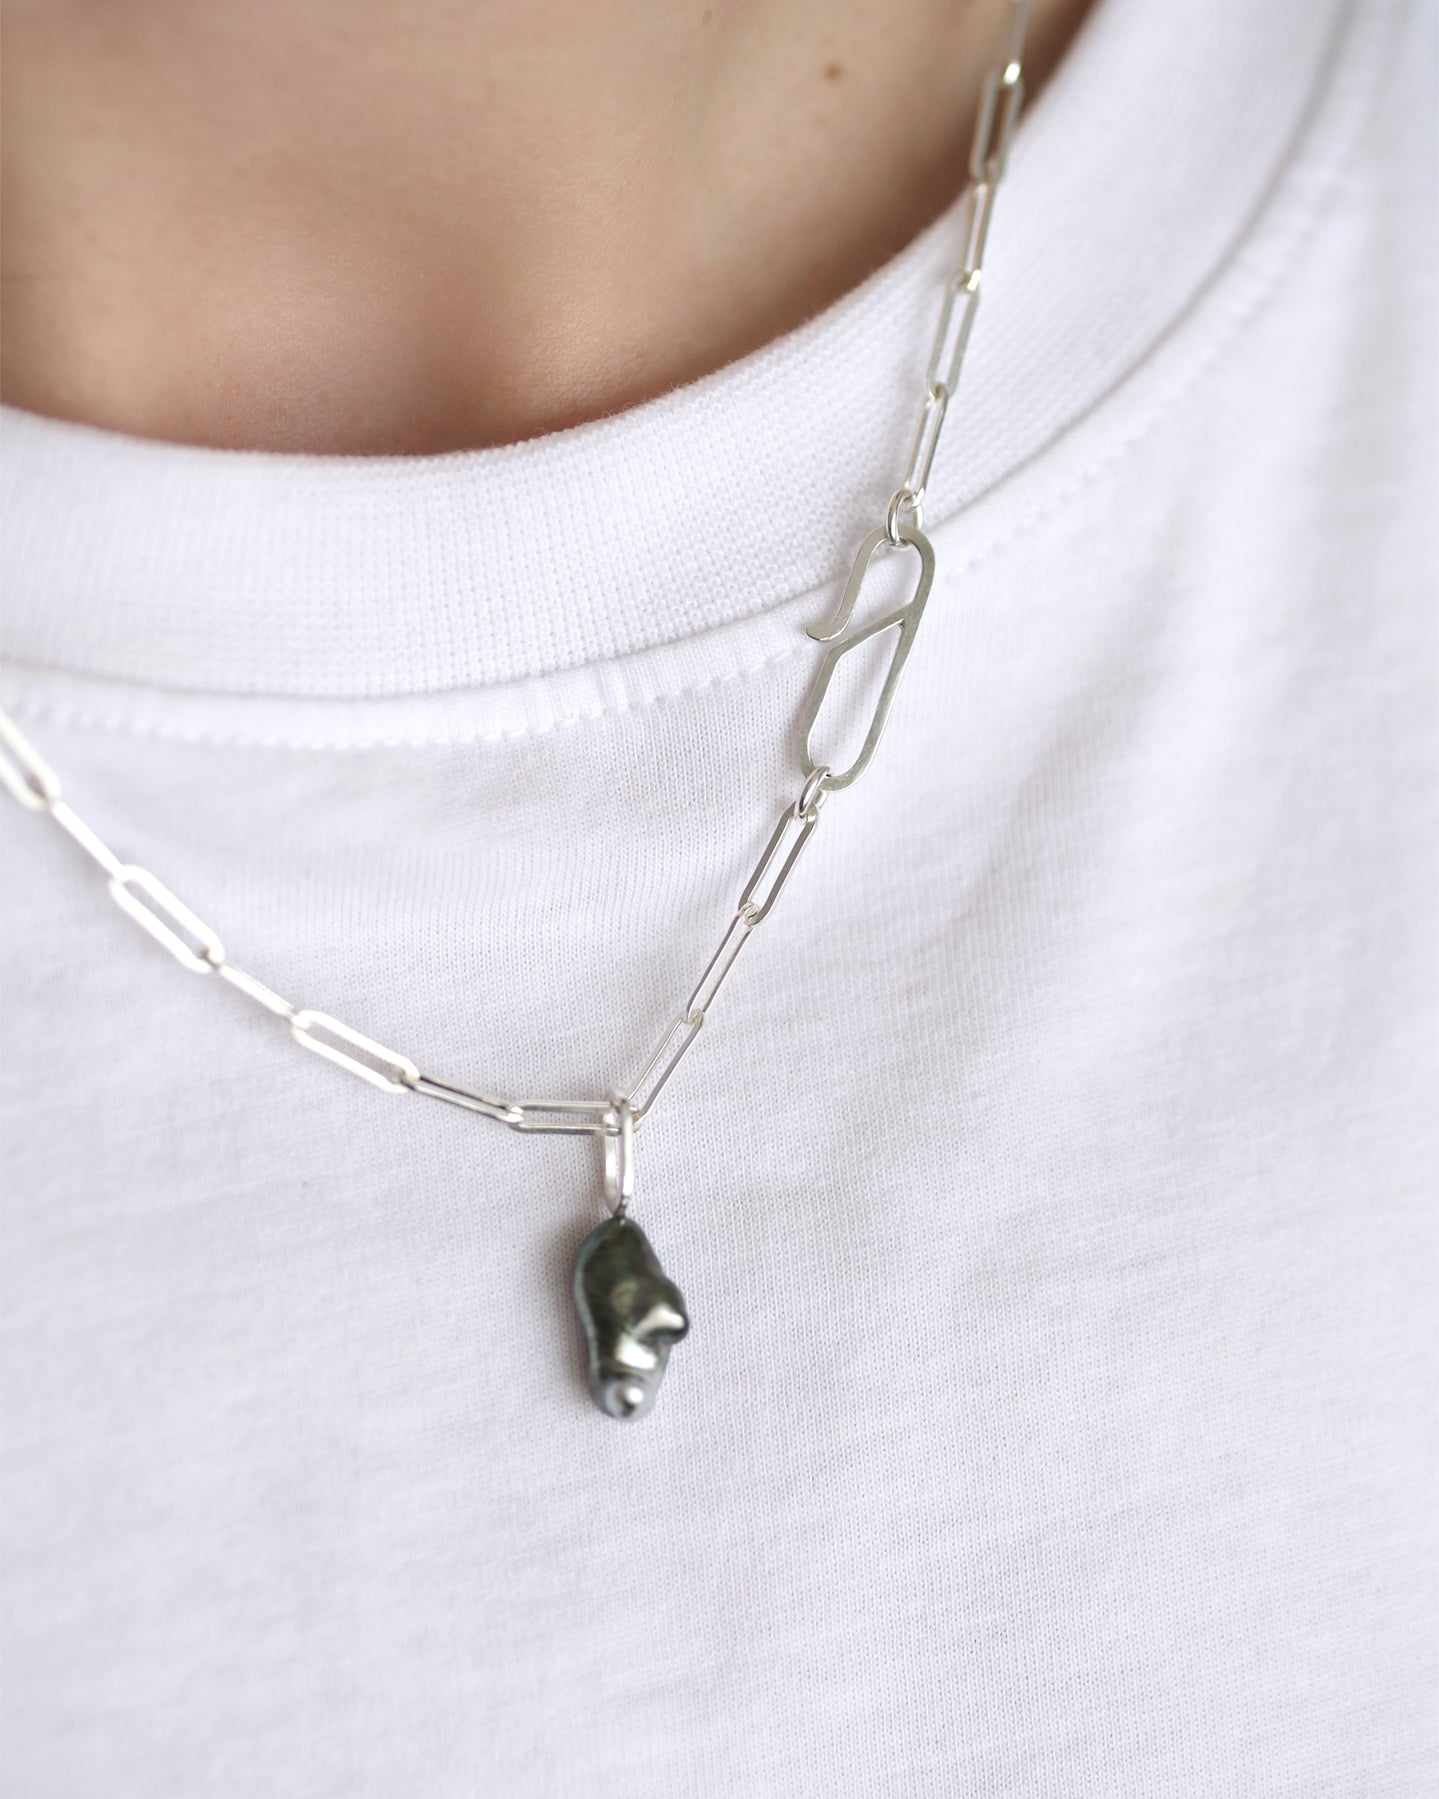 Keshi pearl pendant on silver paper clip chain.